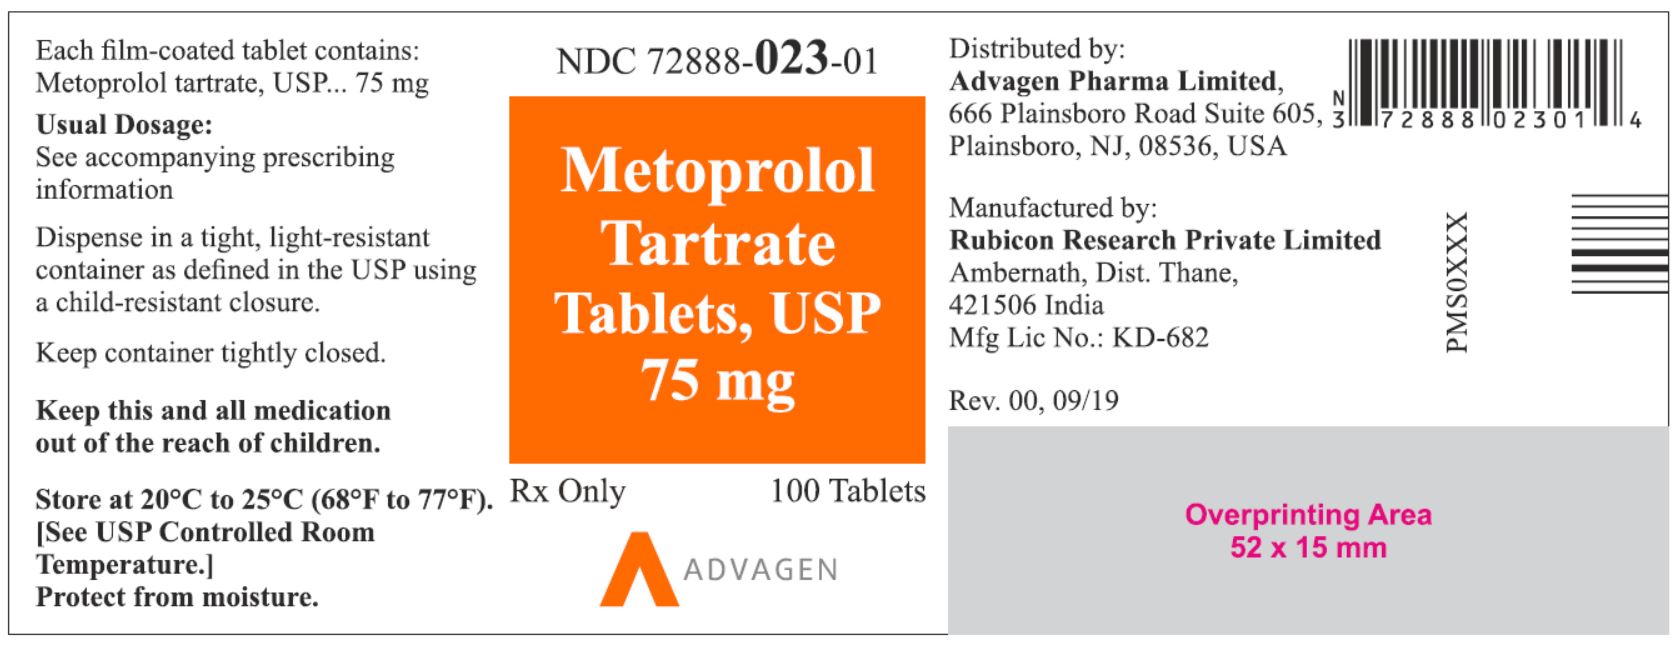 NDC 72888-023-01 - Metoprolol Tartrate Tablets, USP 75 mg - 100 Tablets